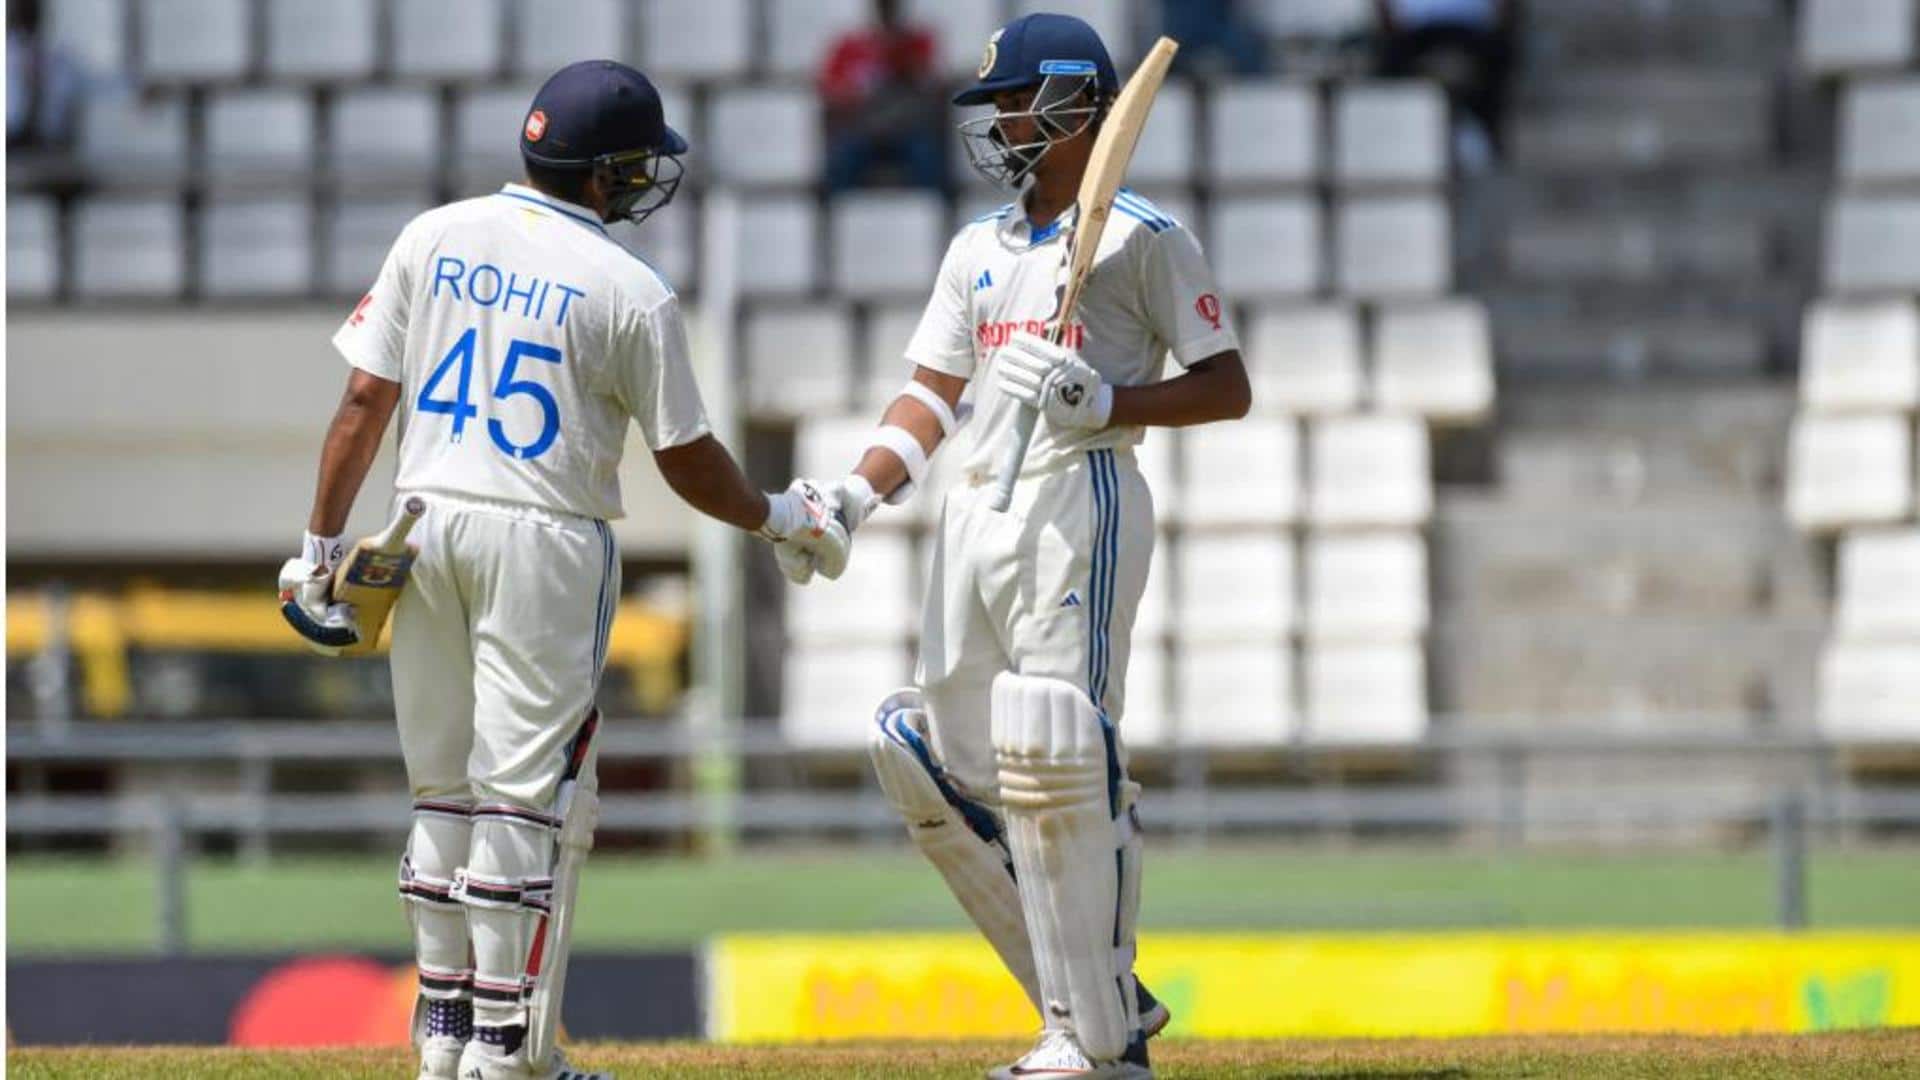 Rohit Sharma slams his fastest Test half-century: Key stats